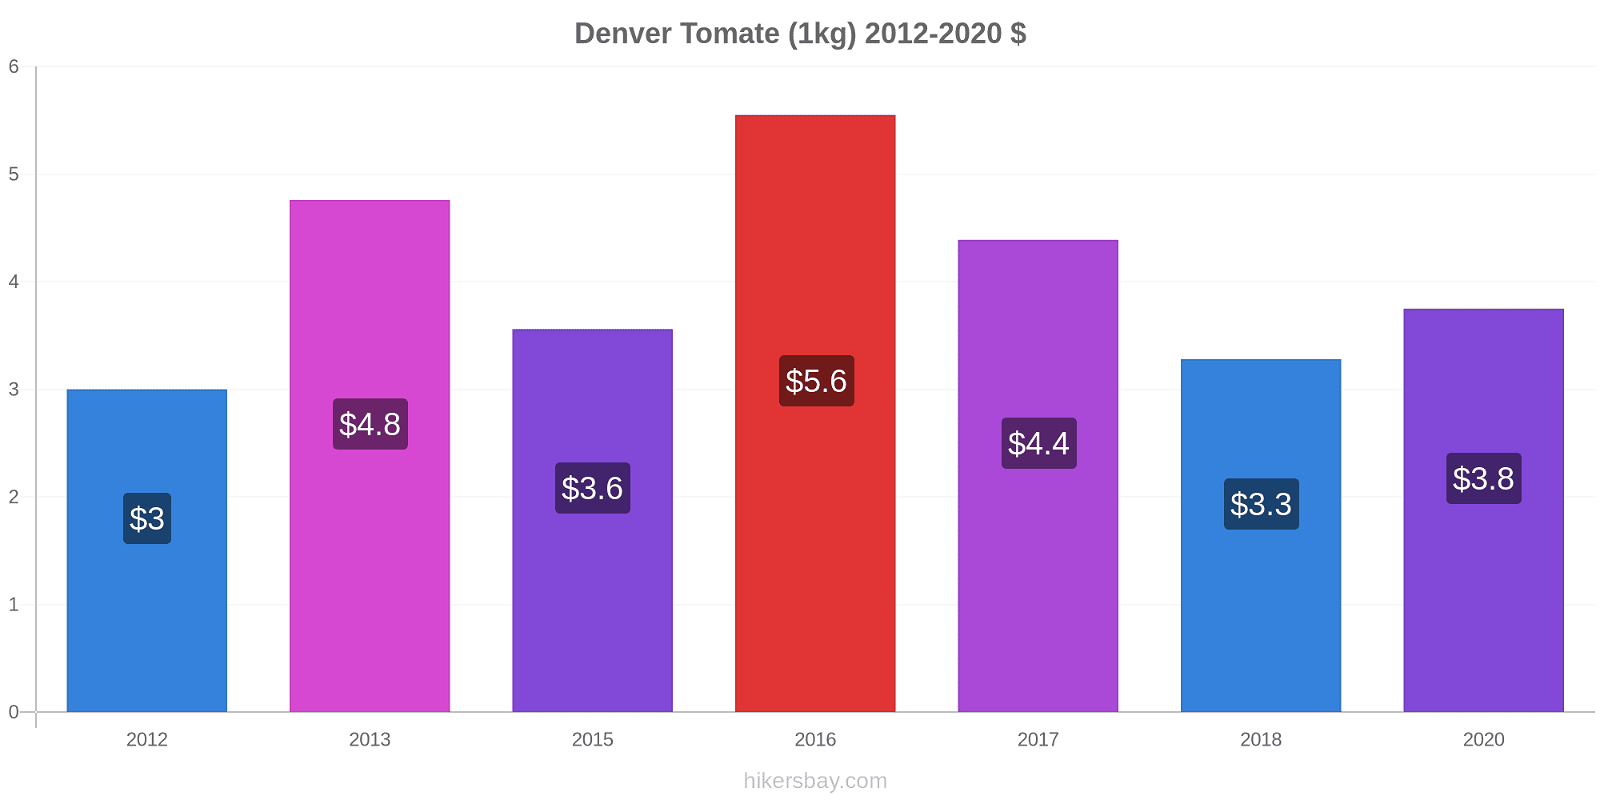 Denver Preisänderungen Tomaten (1kg) hikersbay.com